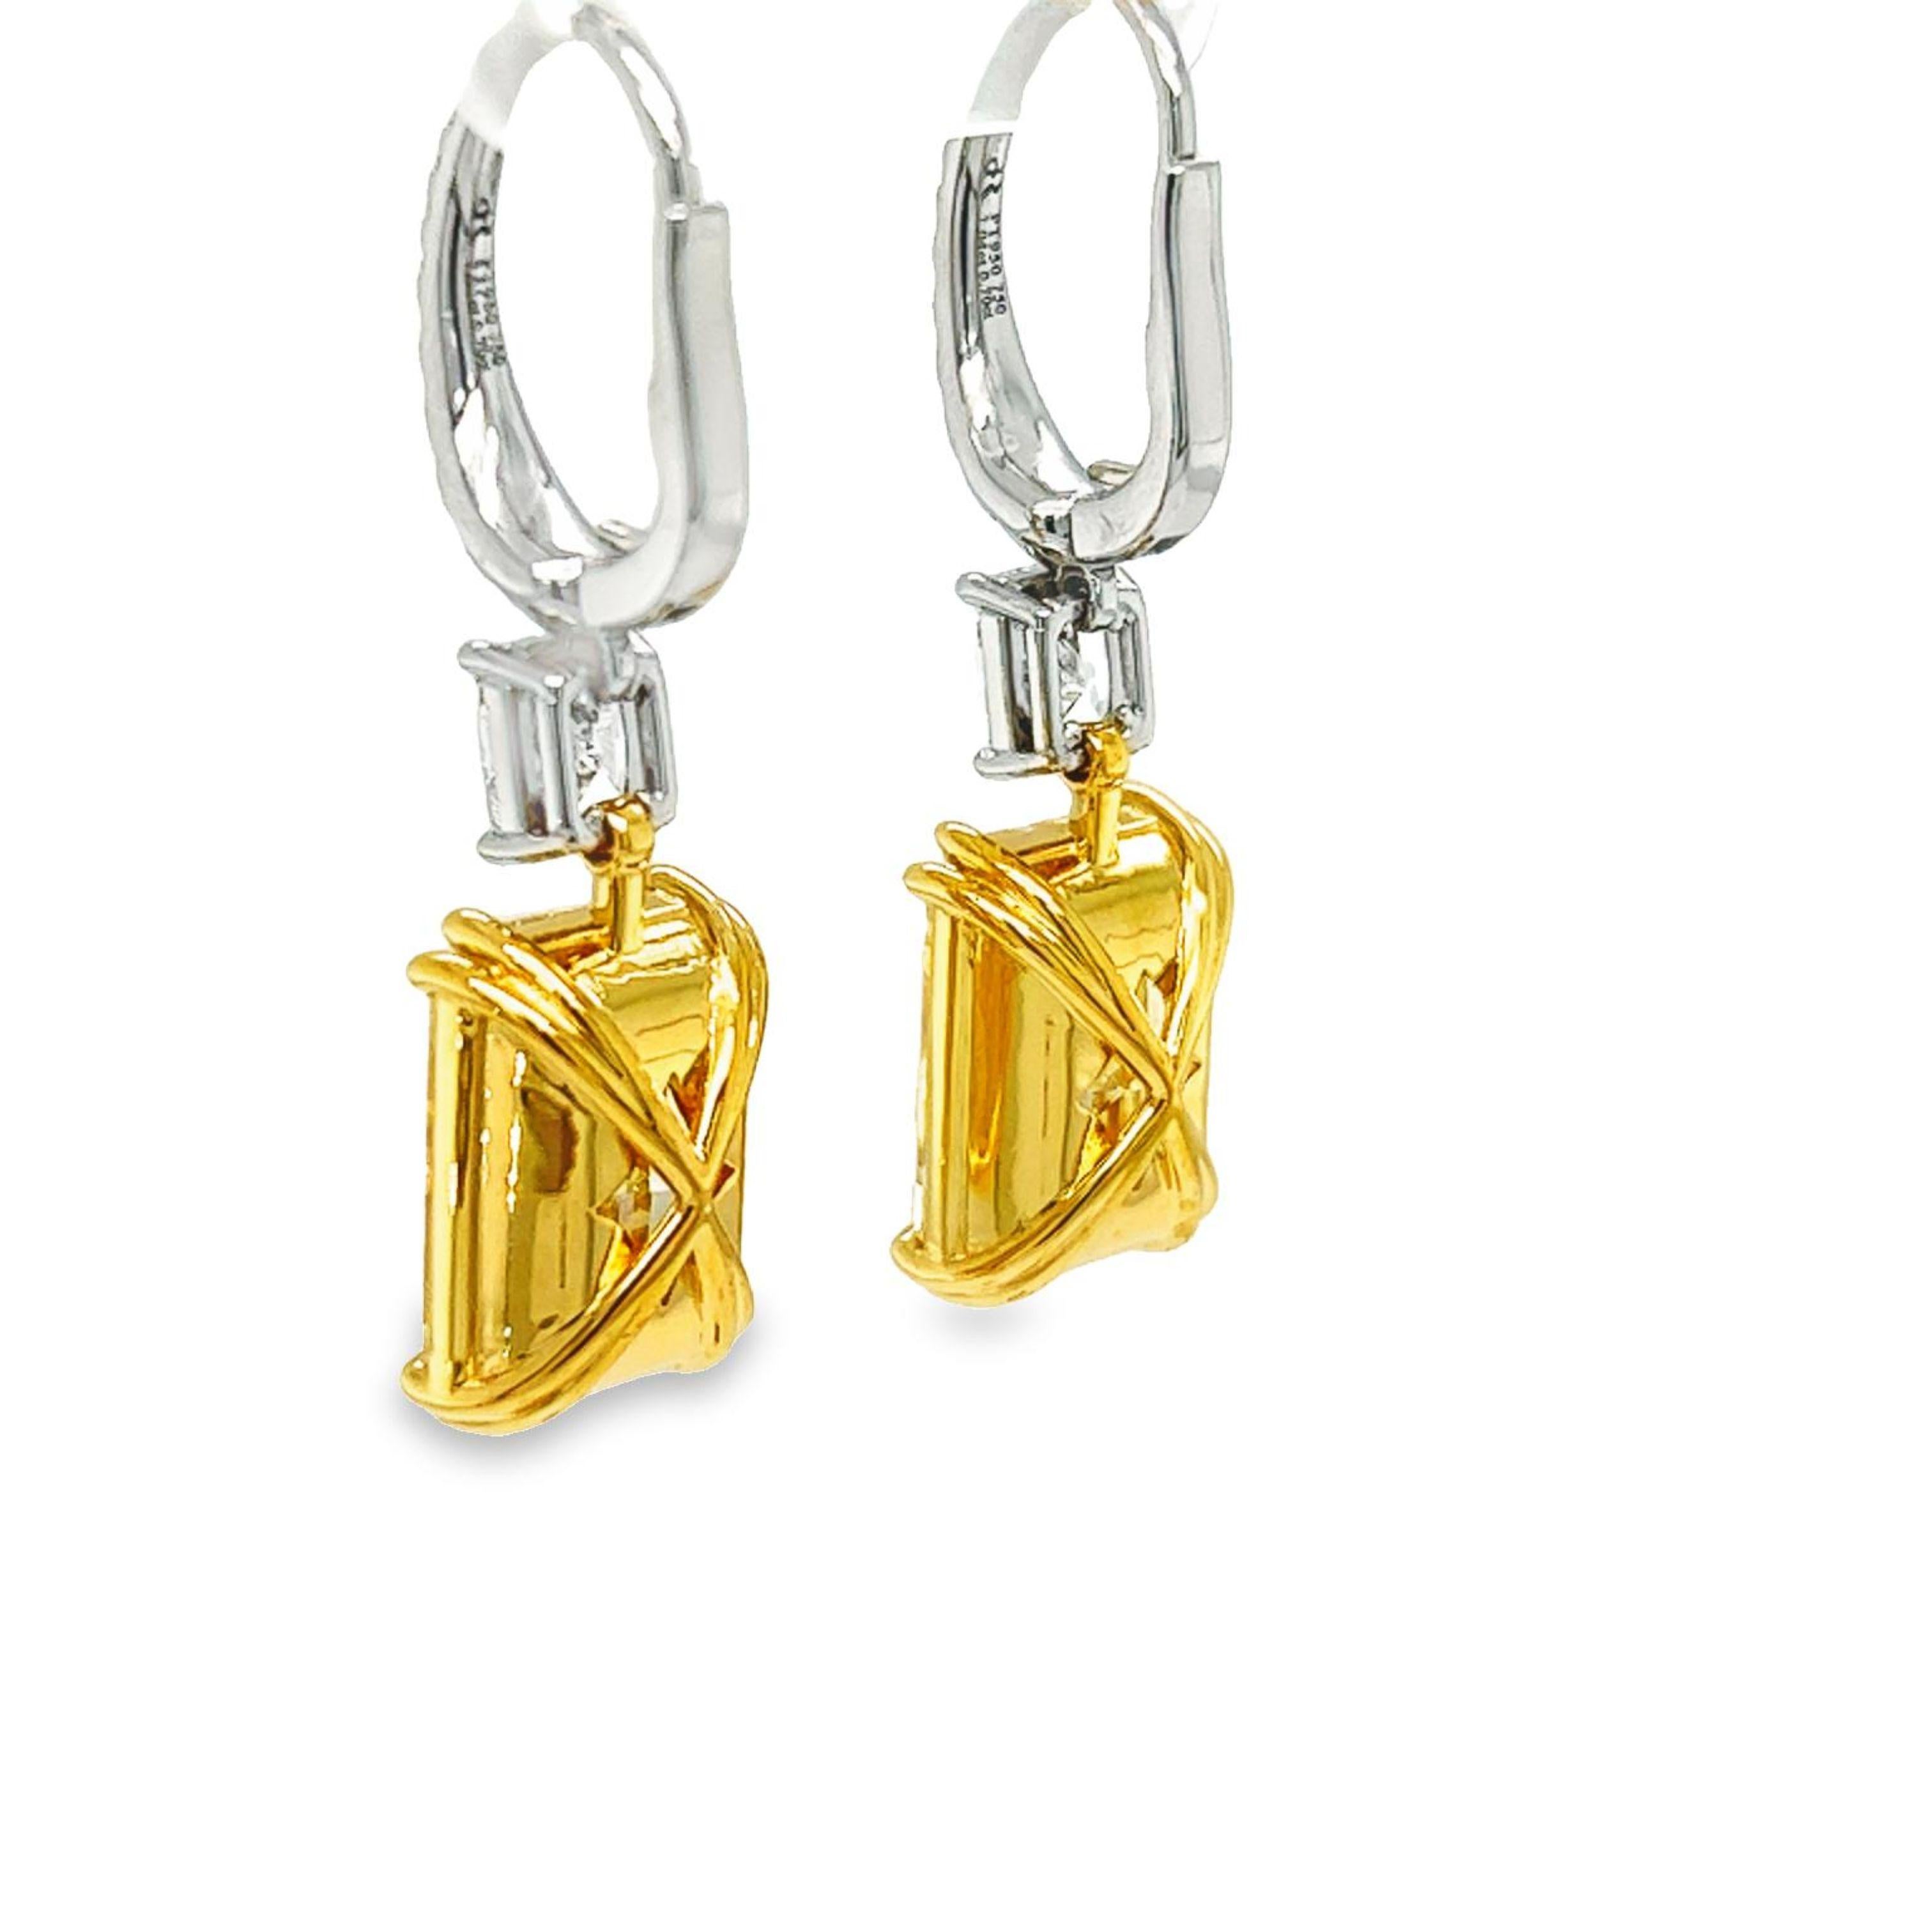 David Rosenberg 14.05 Carat Radiant Cut Yellow GIA Diamond Drop Earrings For Sale 1